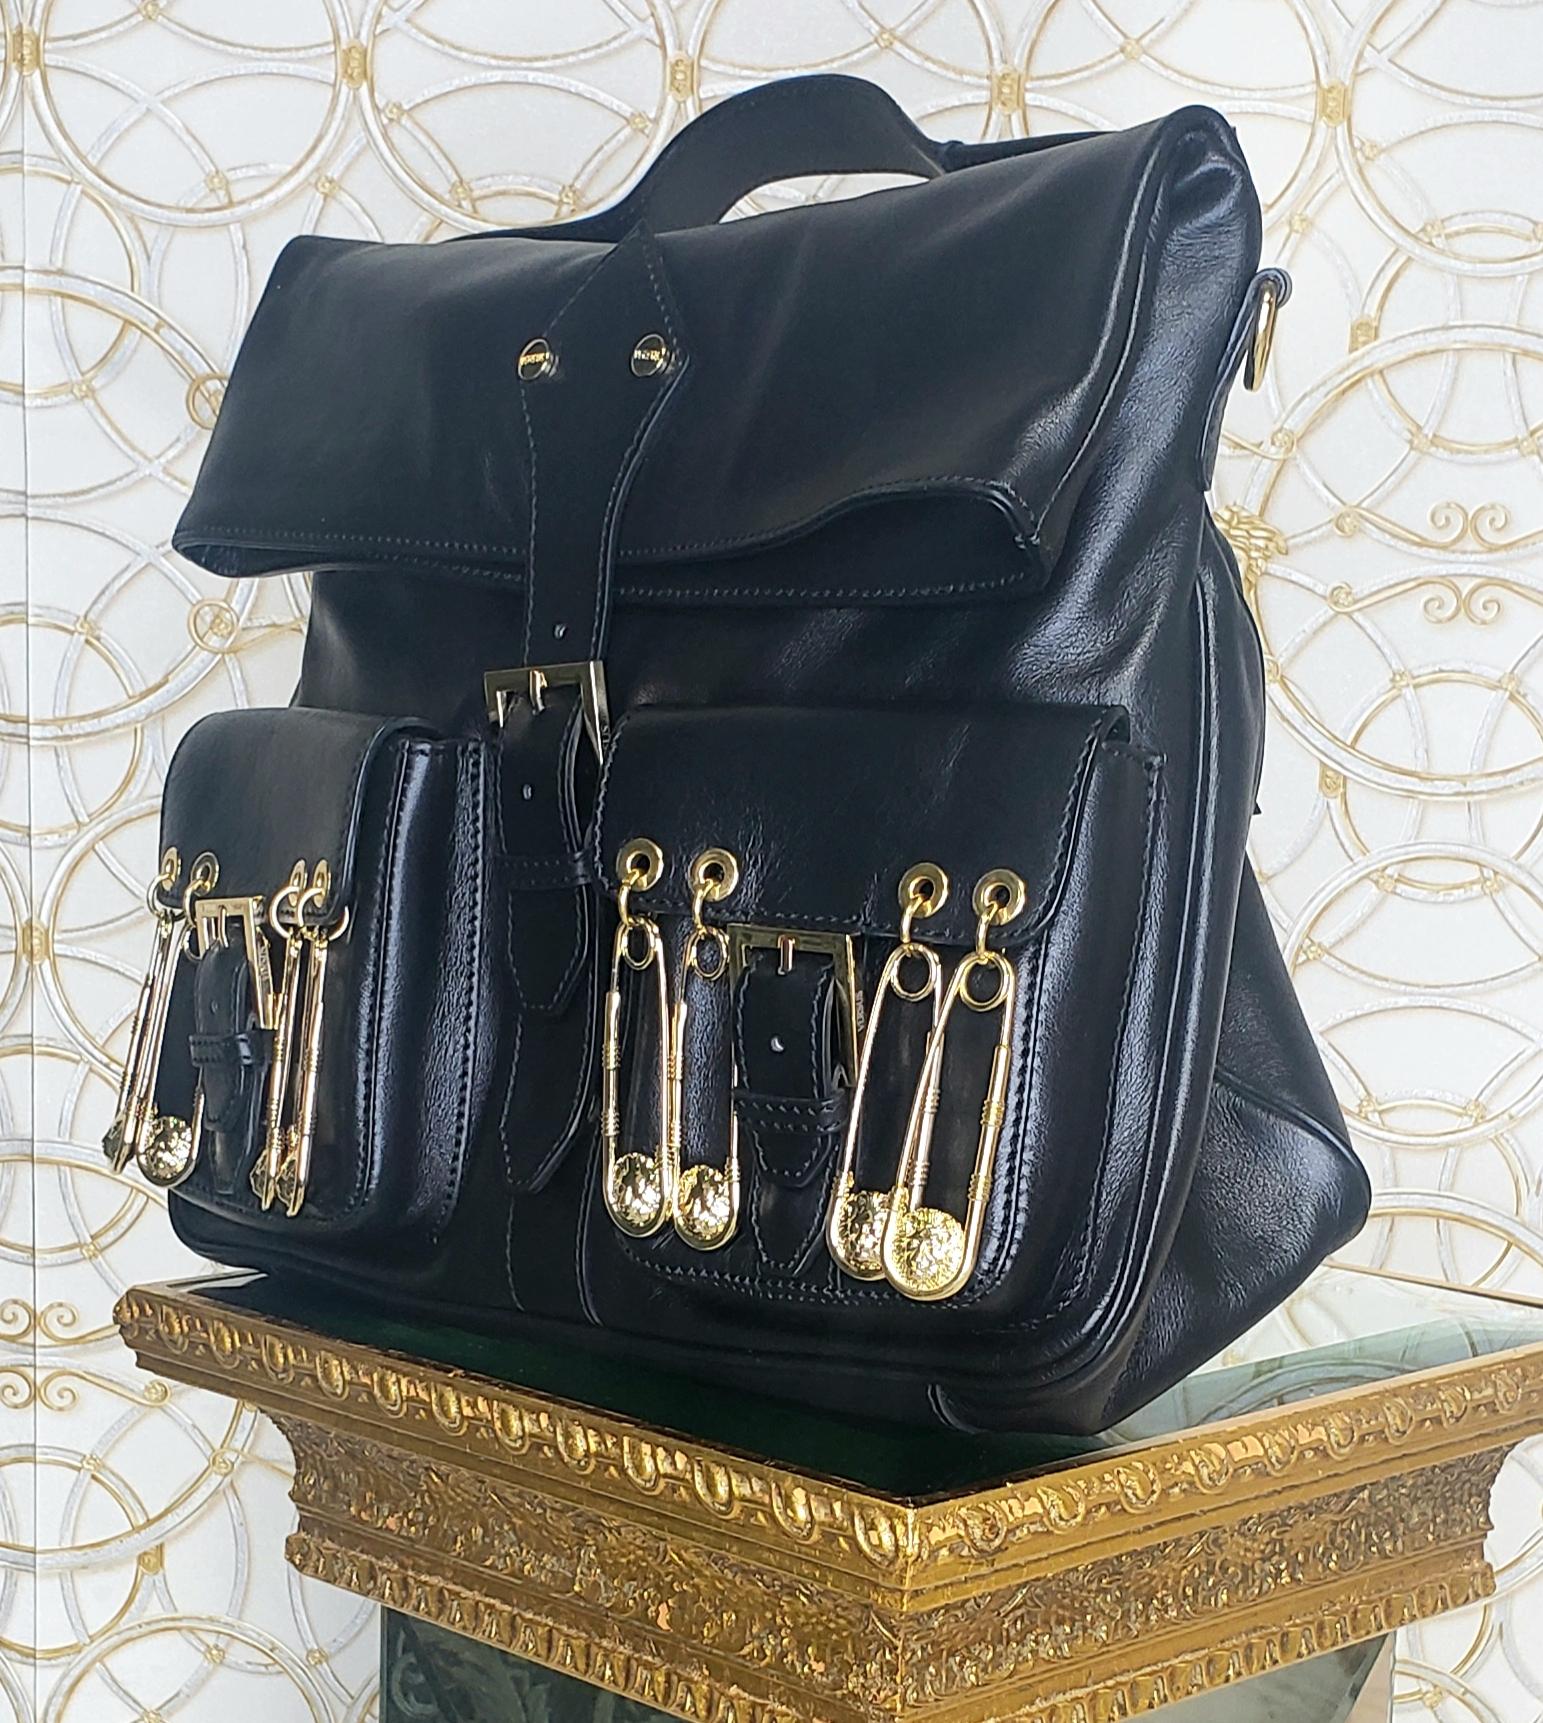 black and gold handbag